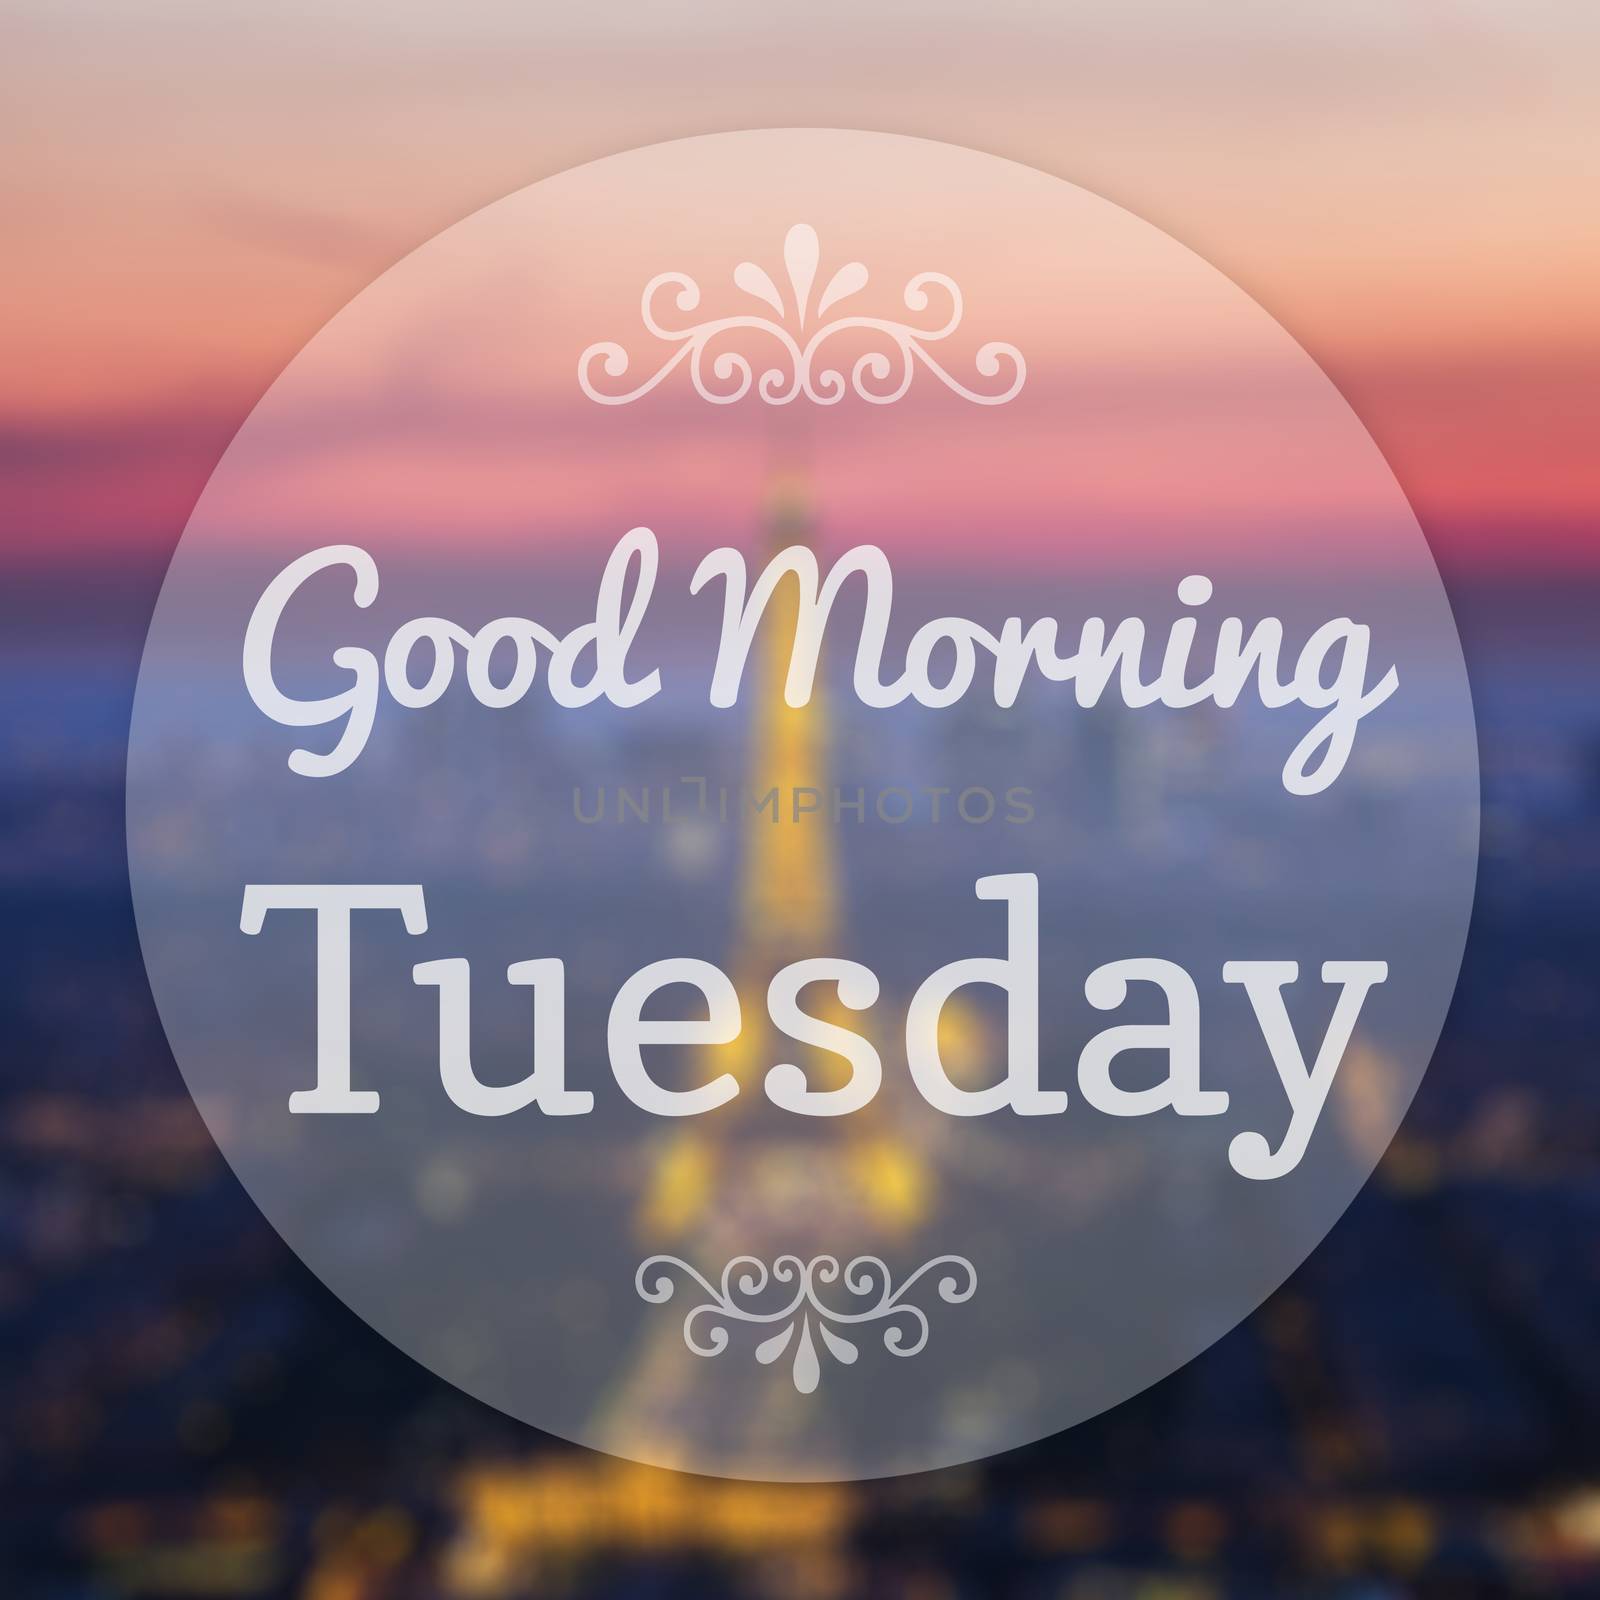 Good Morning Tuesday on Eiffle Paris blur background by 2nix